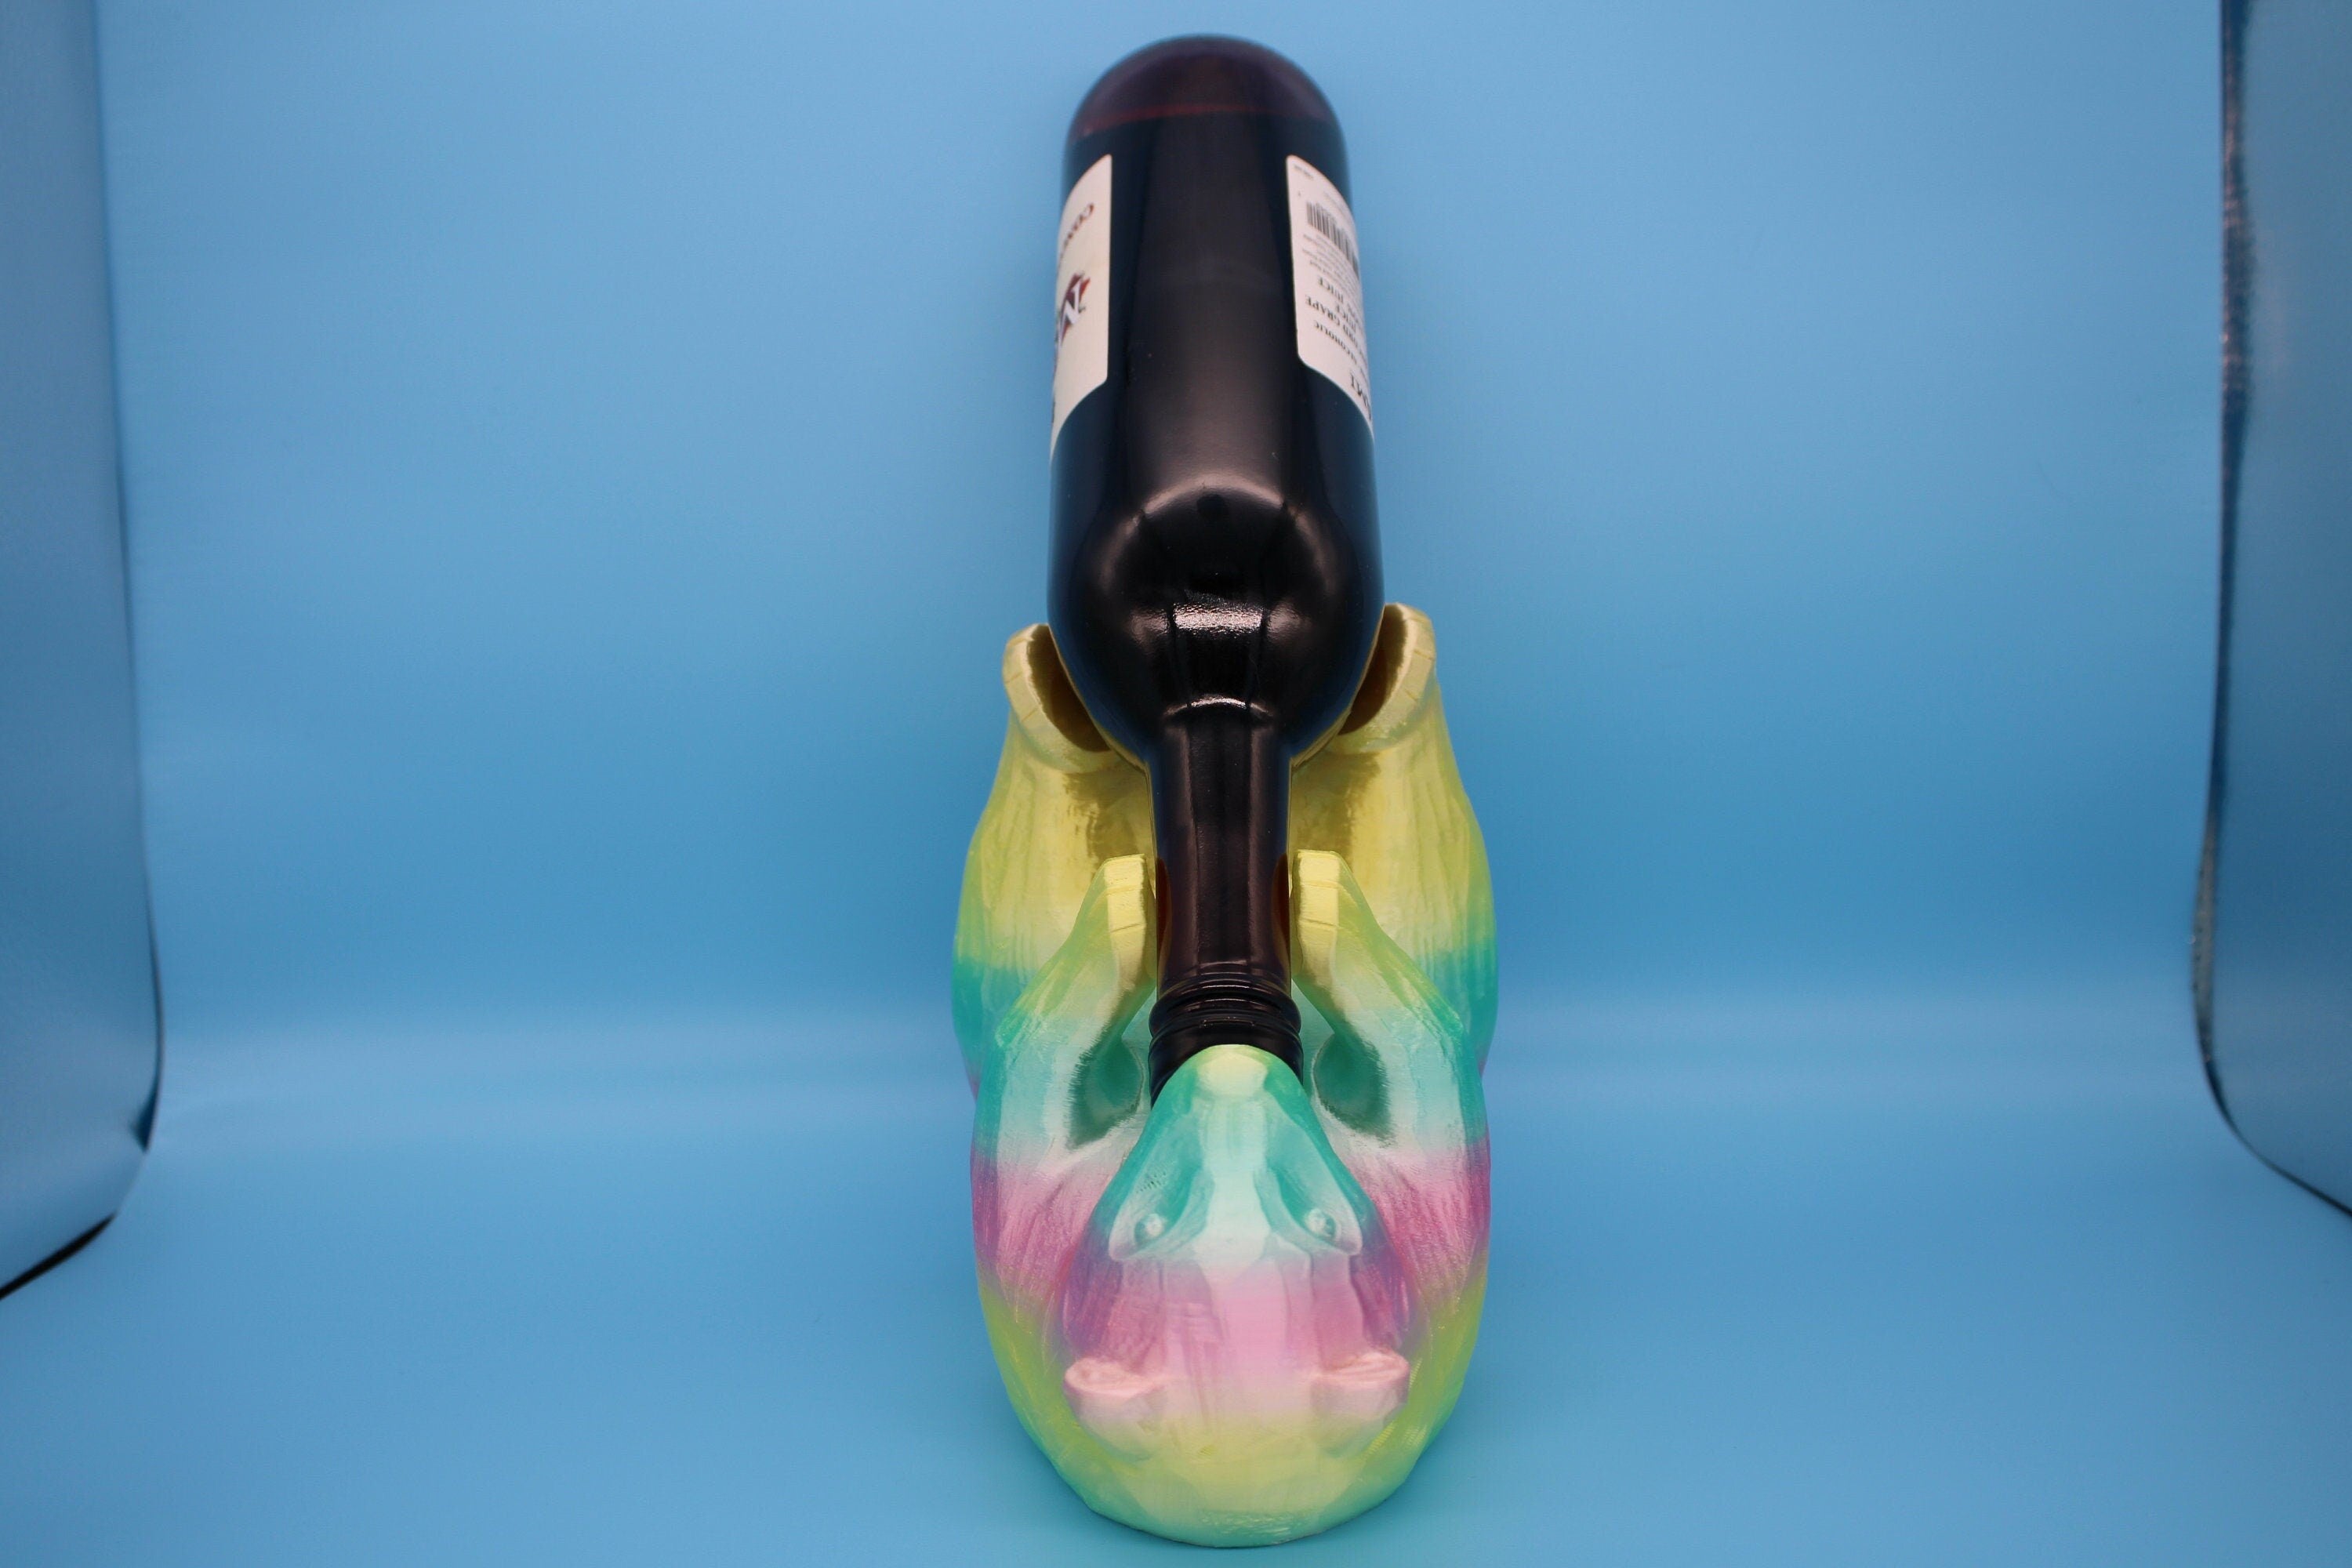 Rainbow Cute Bear Wine Bottle Holder Display. 3D Printed. Holds Wine Bottles 750ml, Looks Amazing on display.